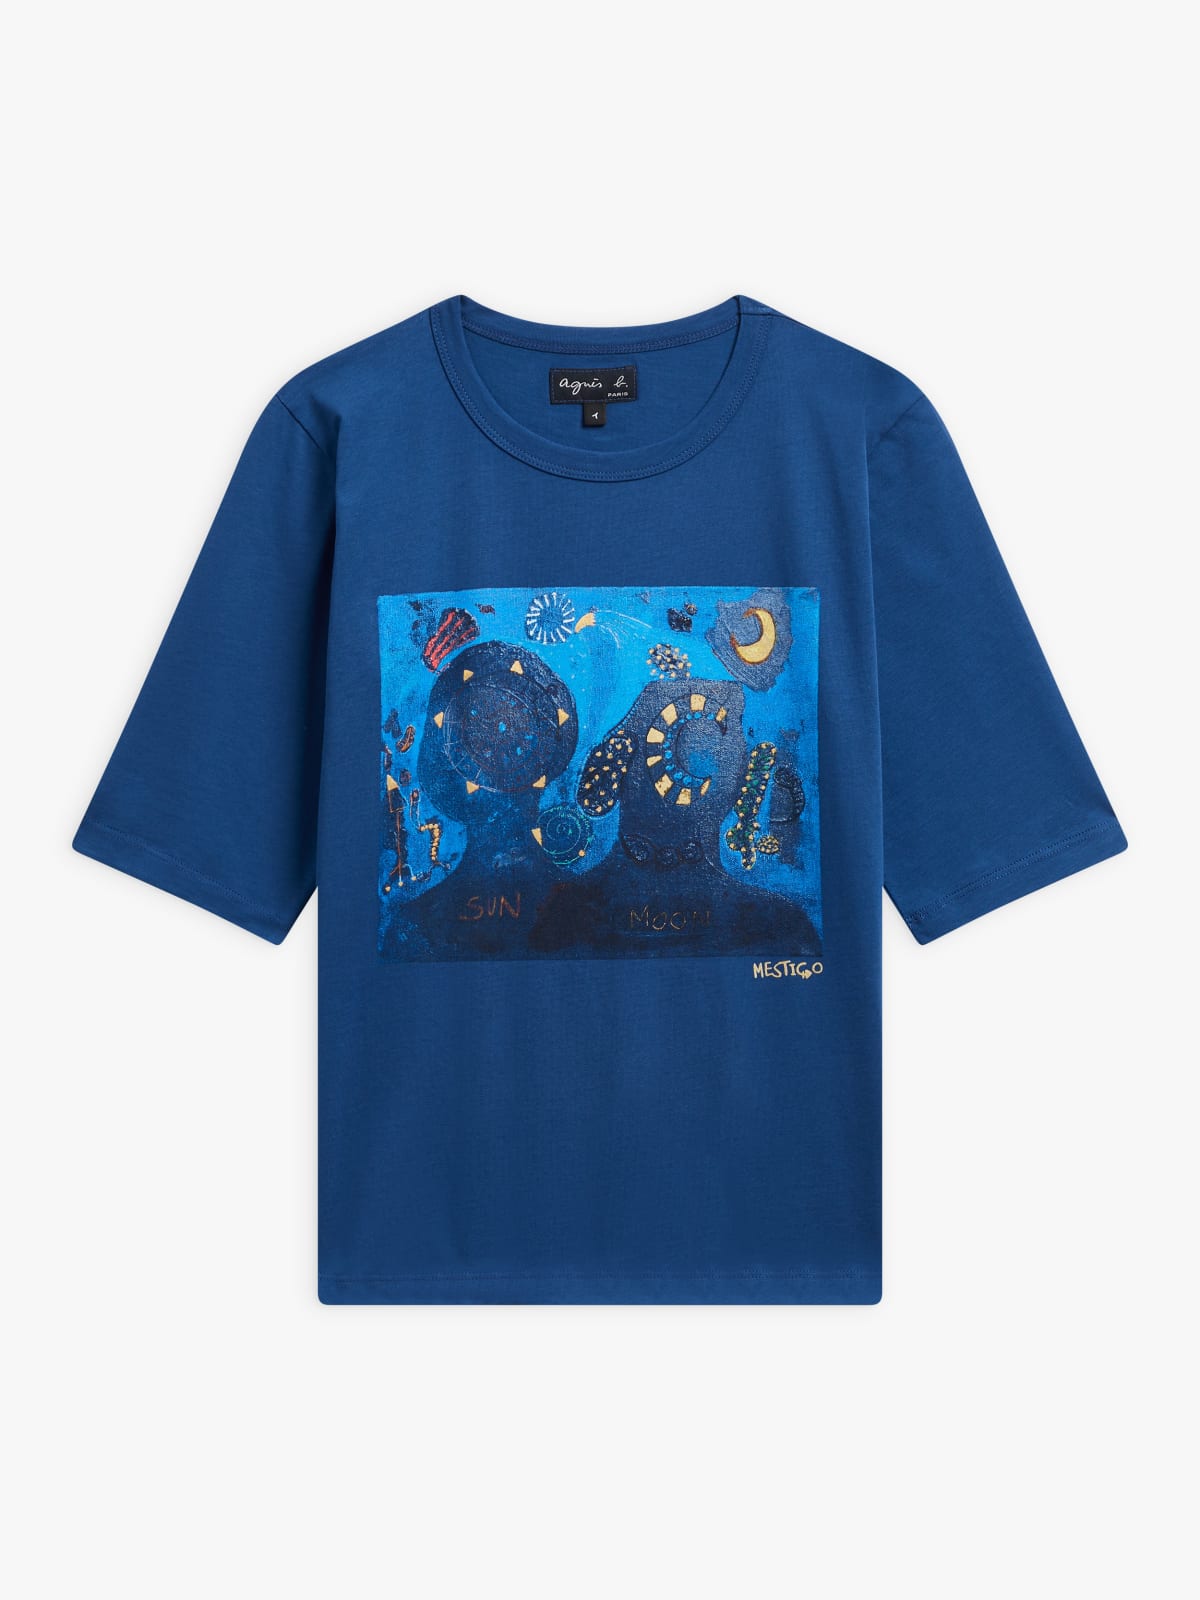 blue cotton jersey Brando t-shirt artist Matheus Mestico